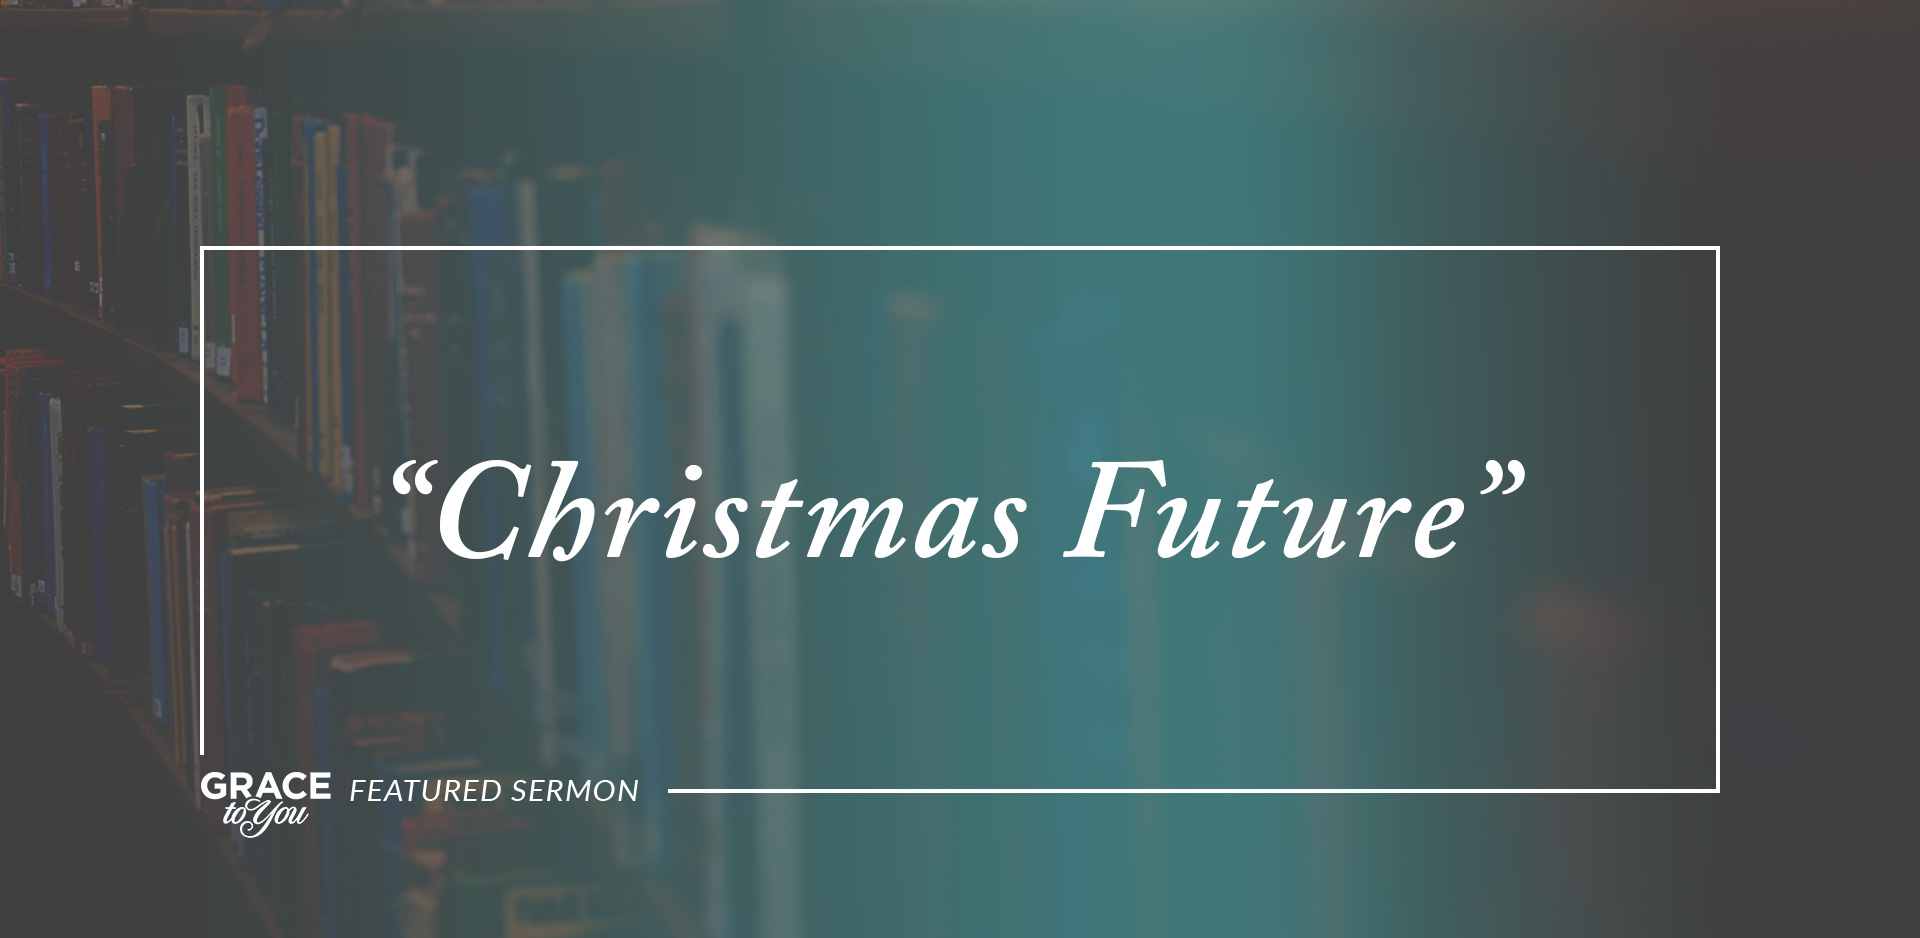 Friday's Featured Sermon: "Christmas Future"